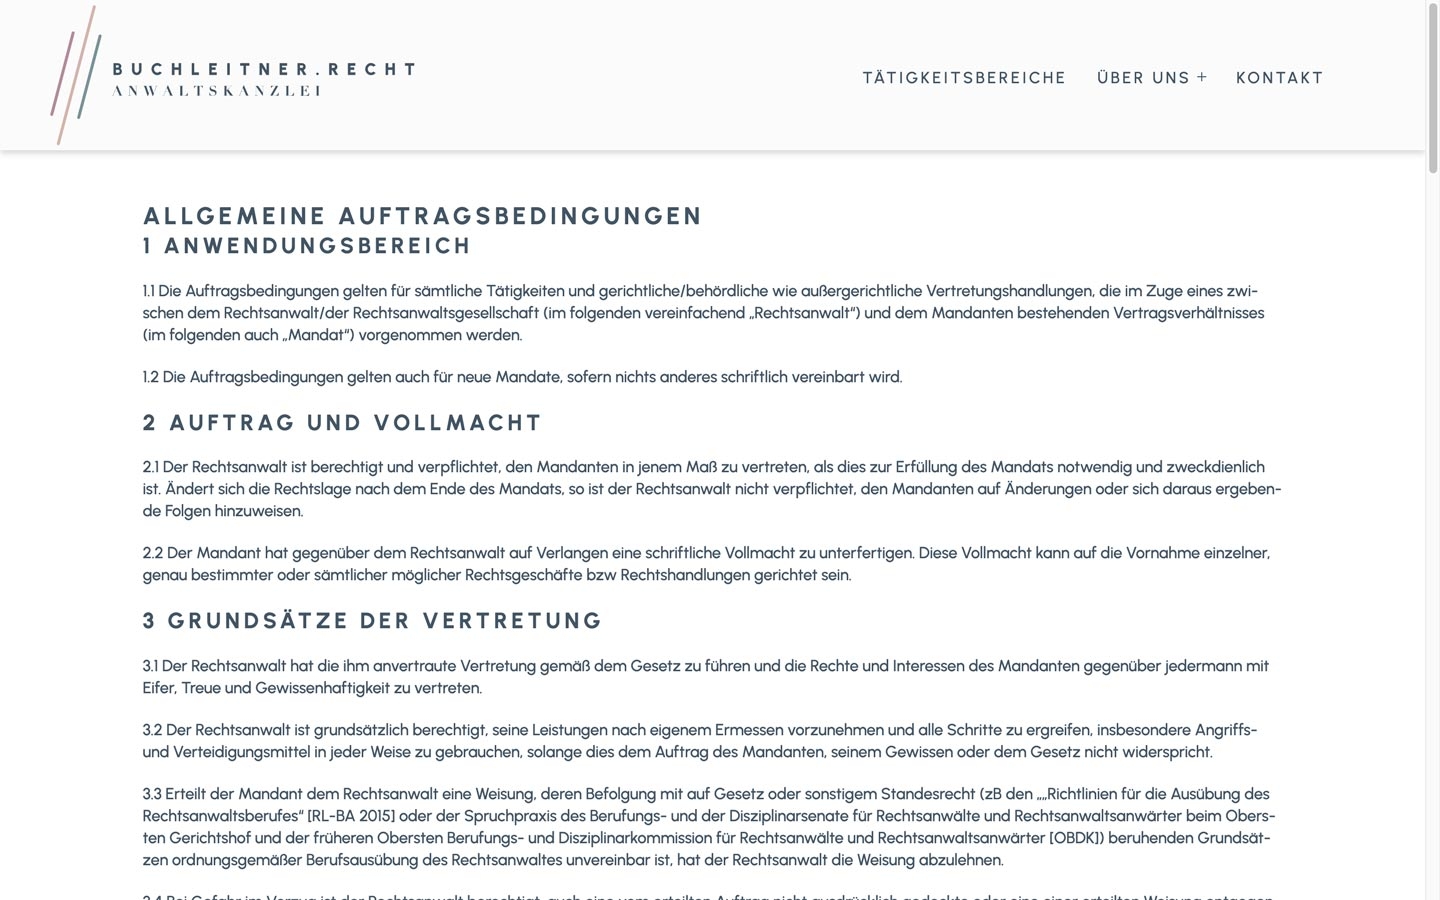 Rechtsanwaltskanzlei Buchleitner | ra-buchleitner.at | 2023 (Screen Only 03) © echonet communication / Auftraggeber